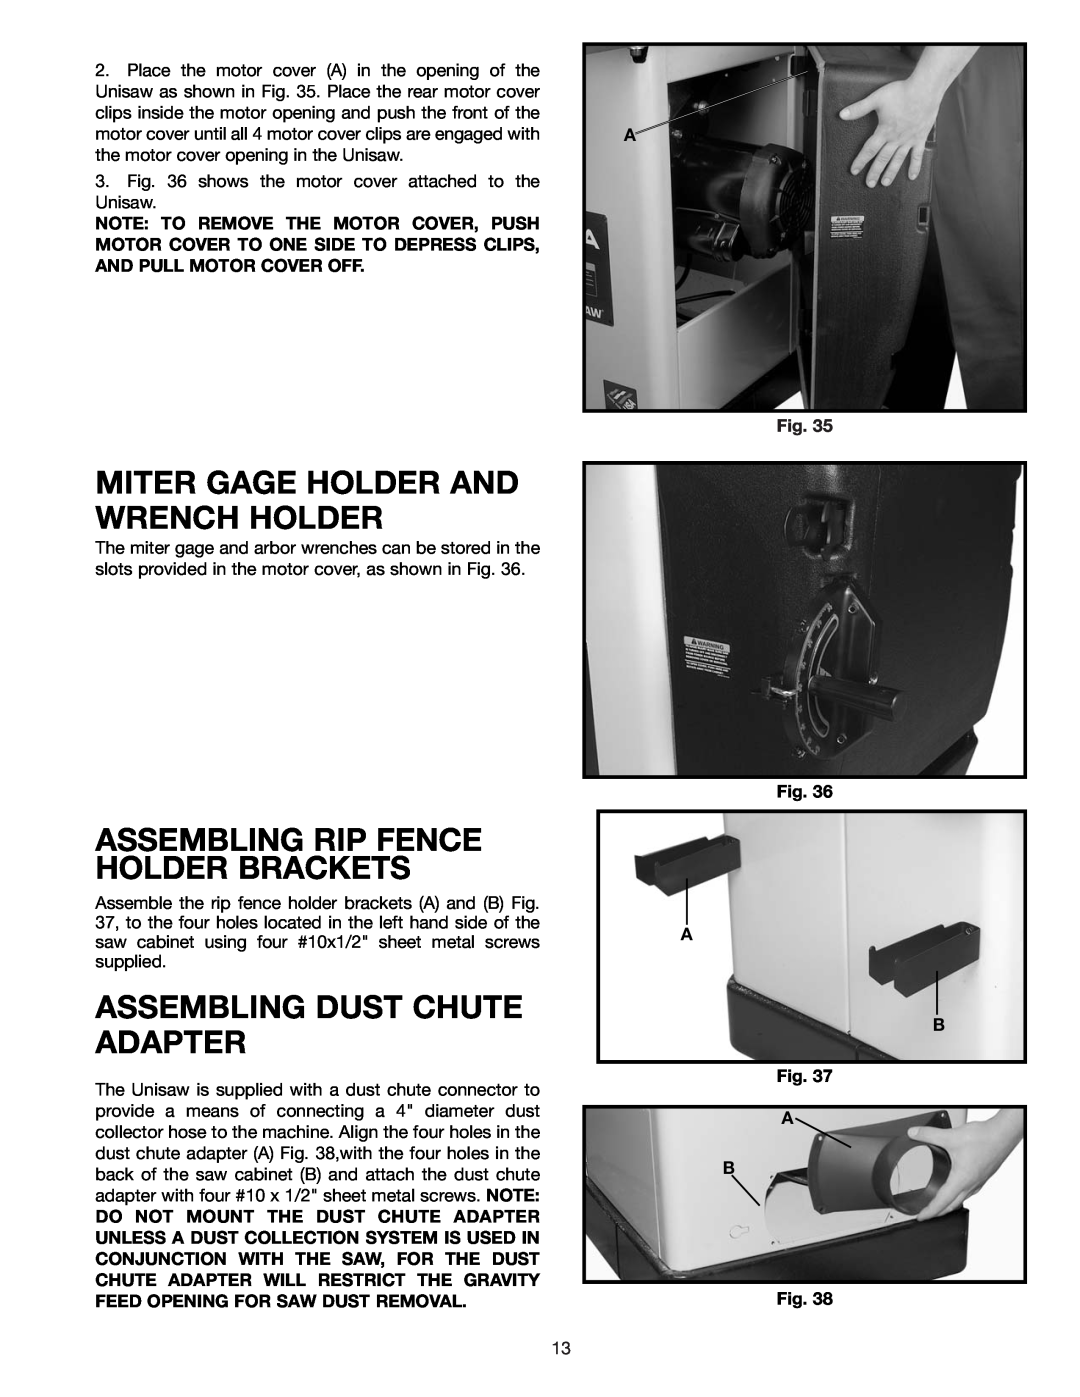 Delta 34-814 Miter Gage Holder And Wrench Holder, Assembling Rip Fence Holder Brackets, Assembling Dust Chute Adapter 